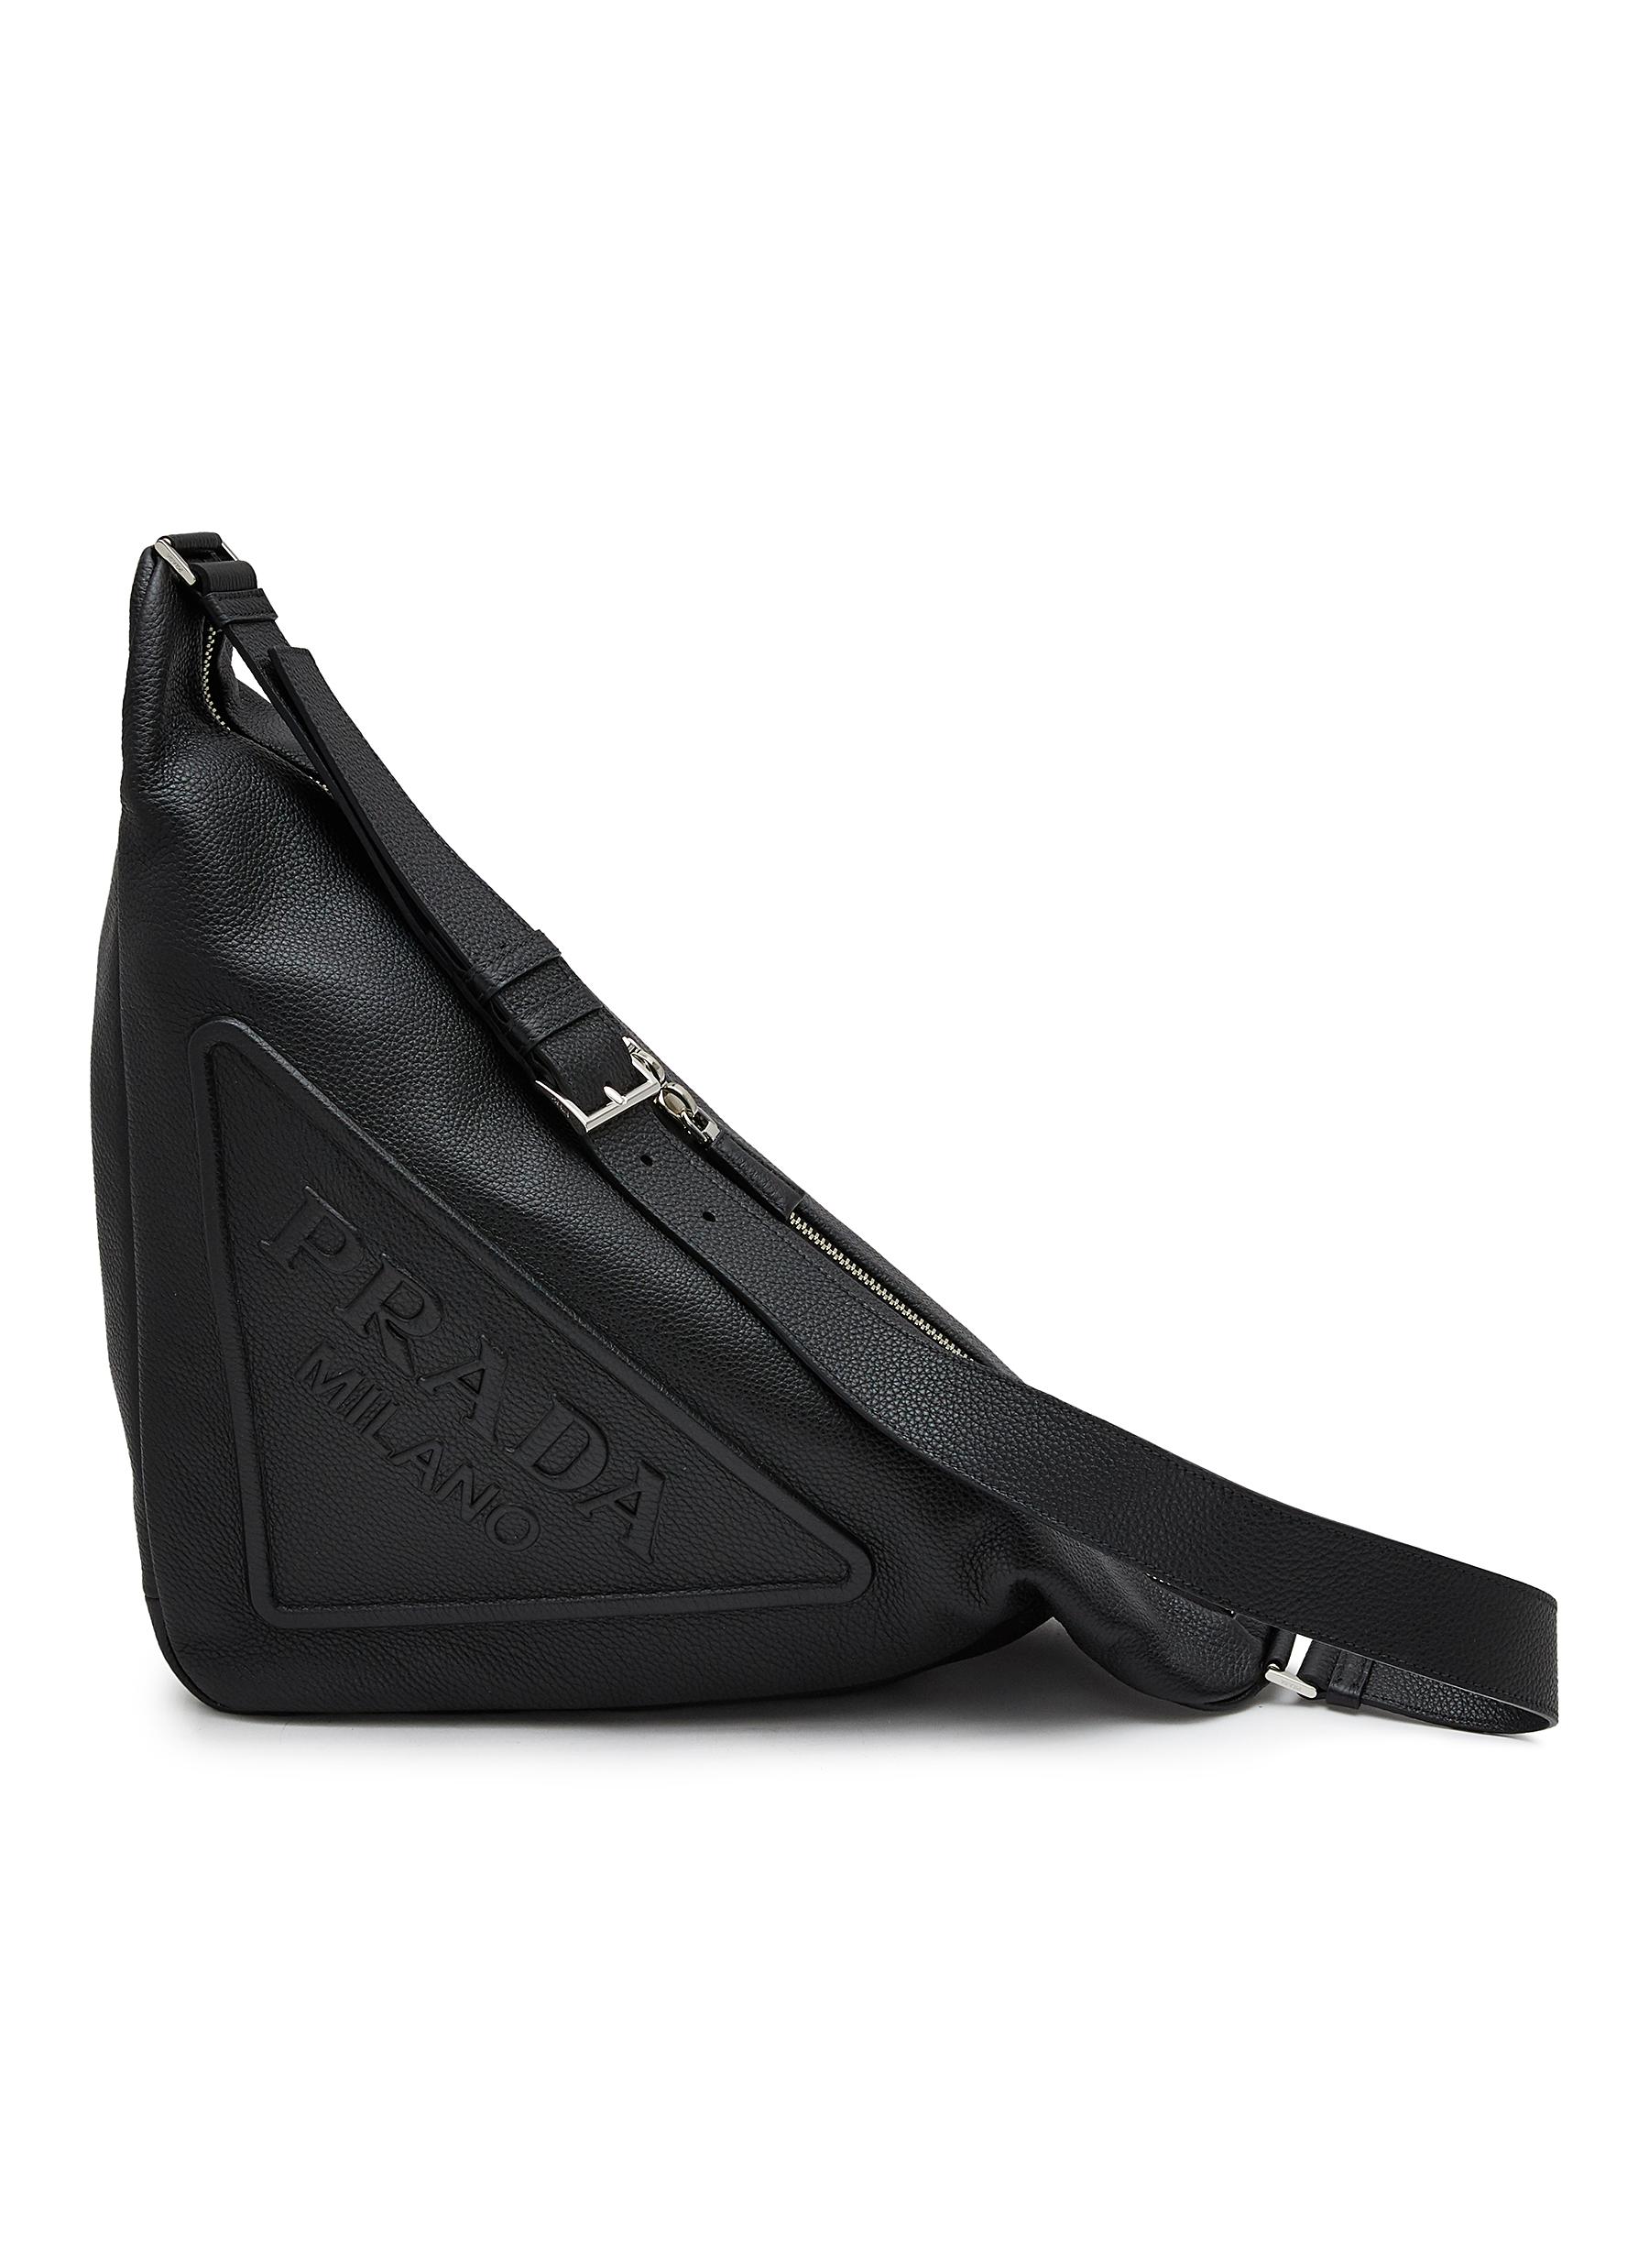 Prada Men's Triangle Leather Bag